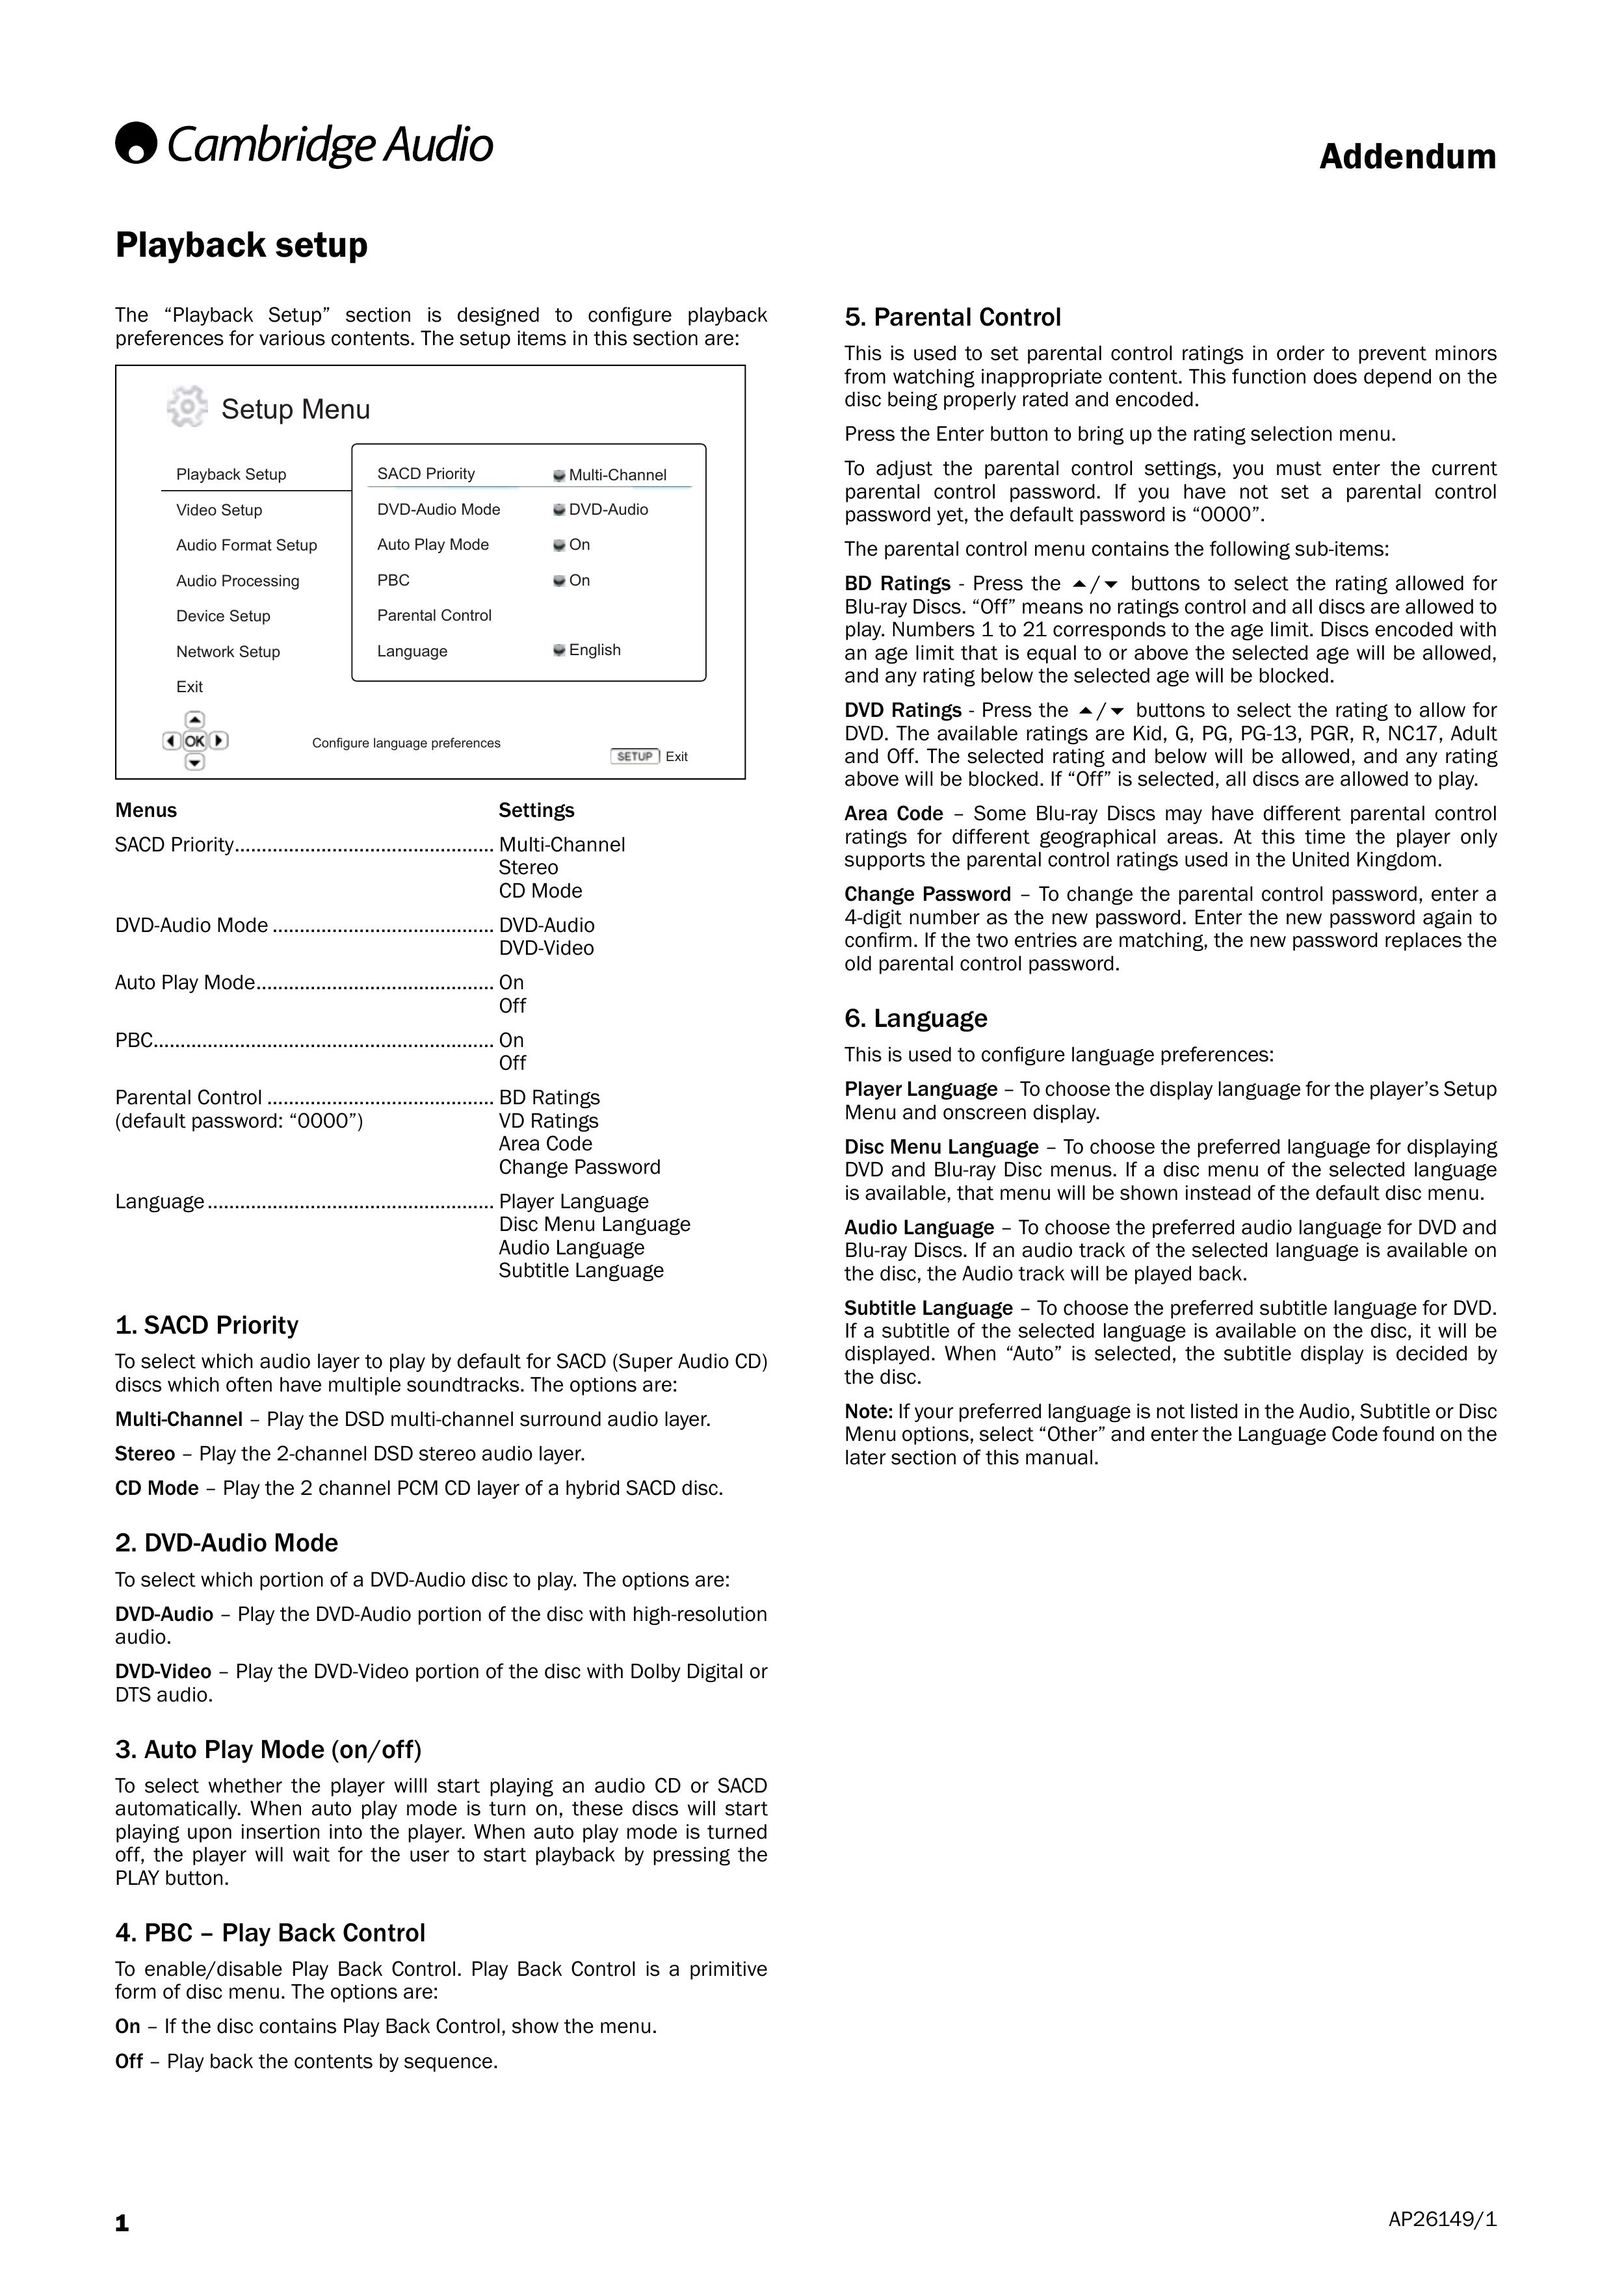 Cambridge Audio AP26149/1 Blu-ray Player User Manual (Page 1)